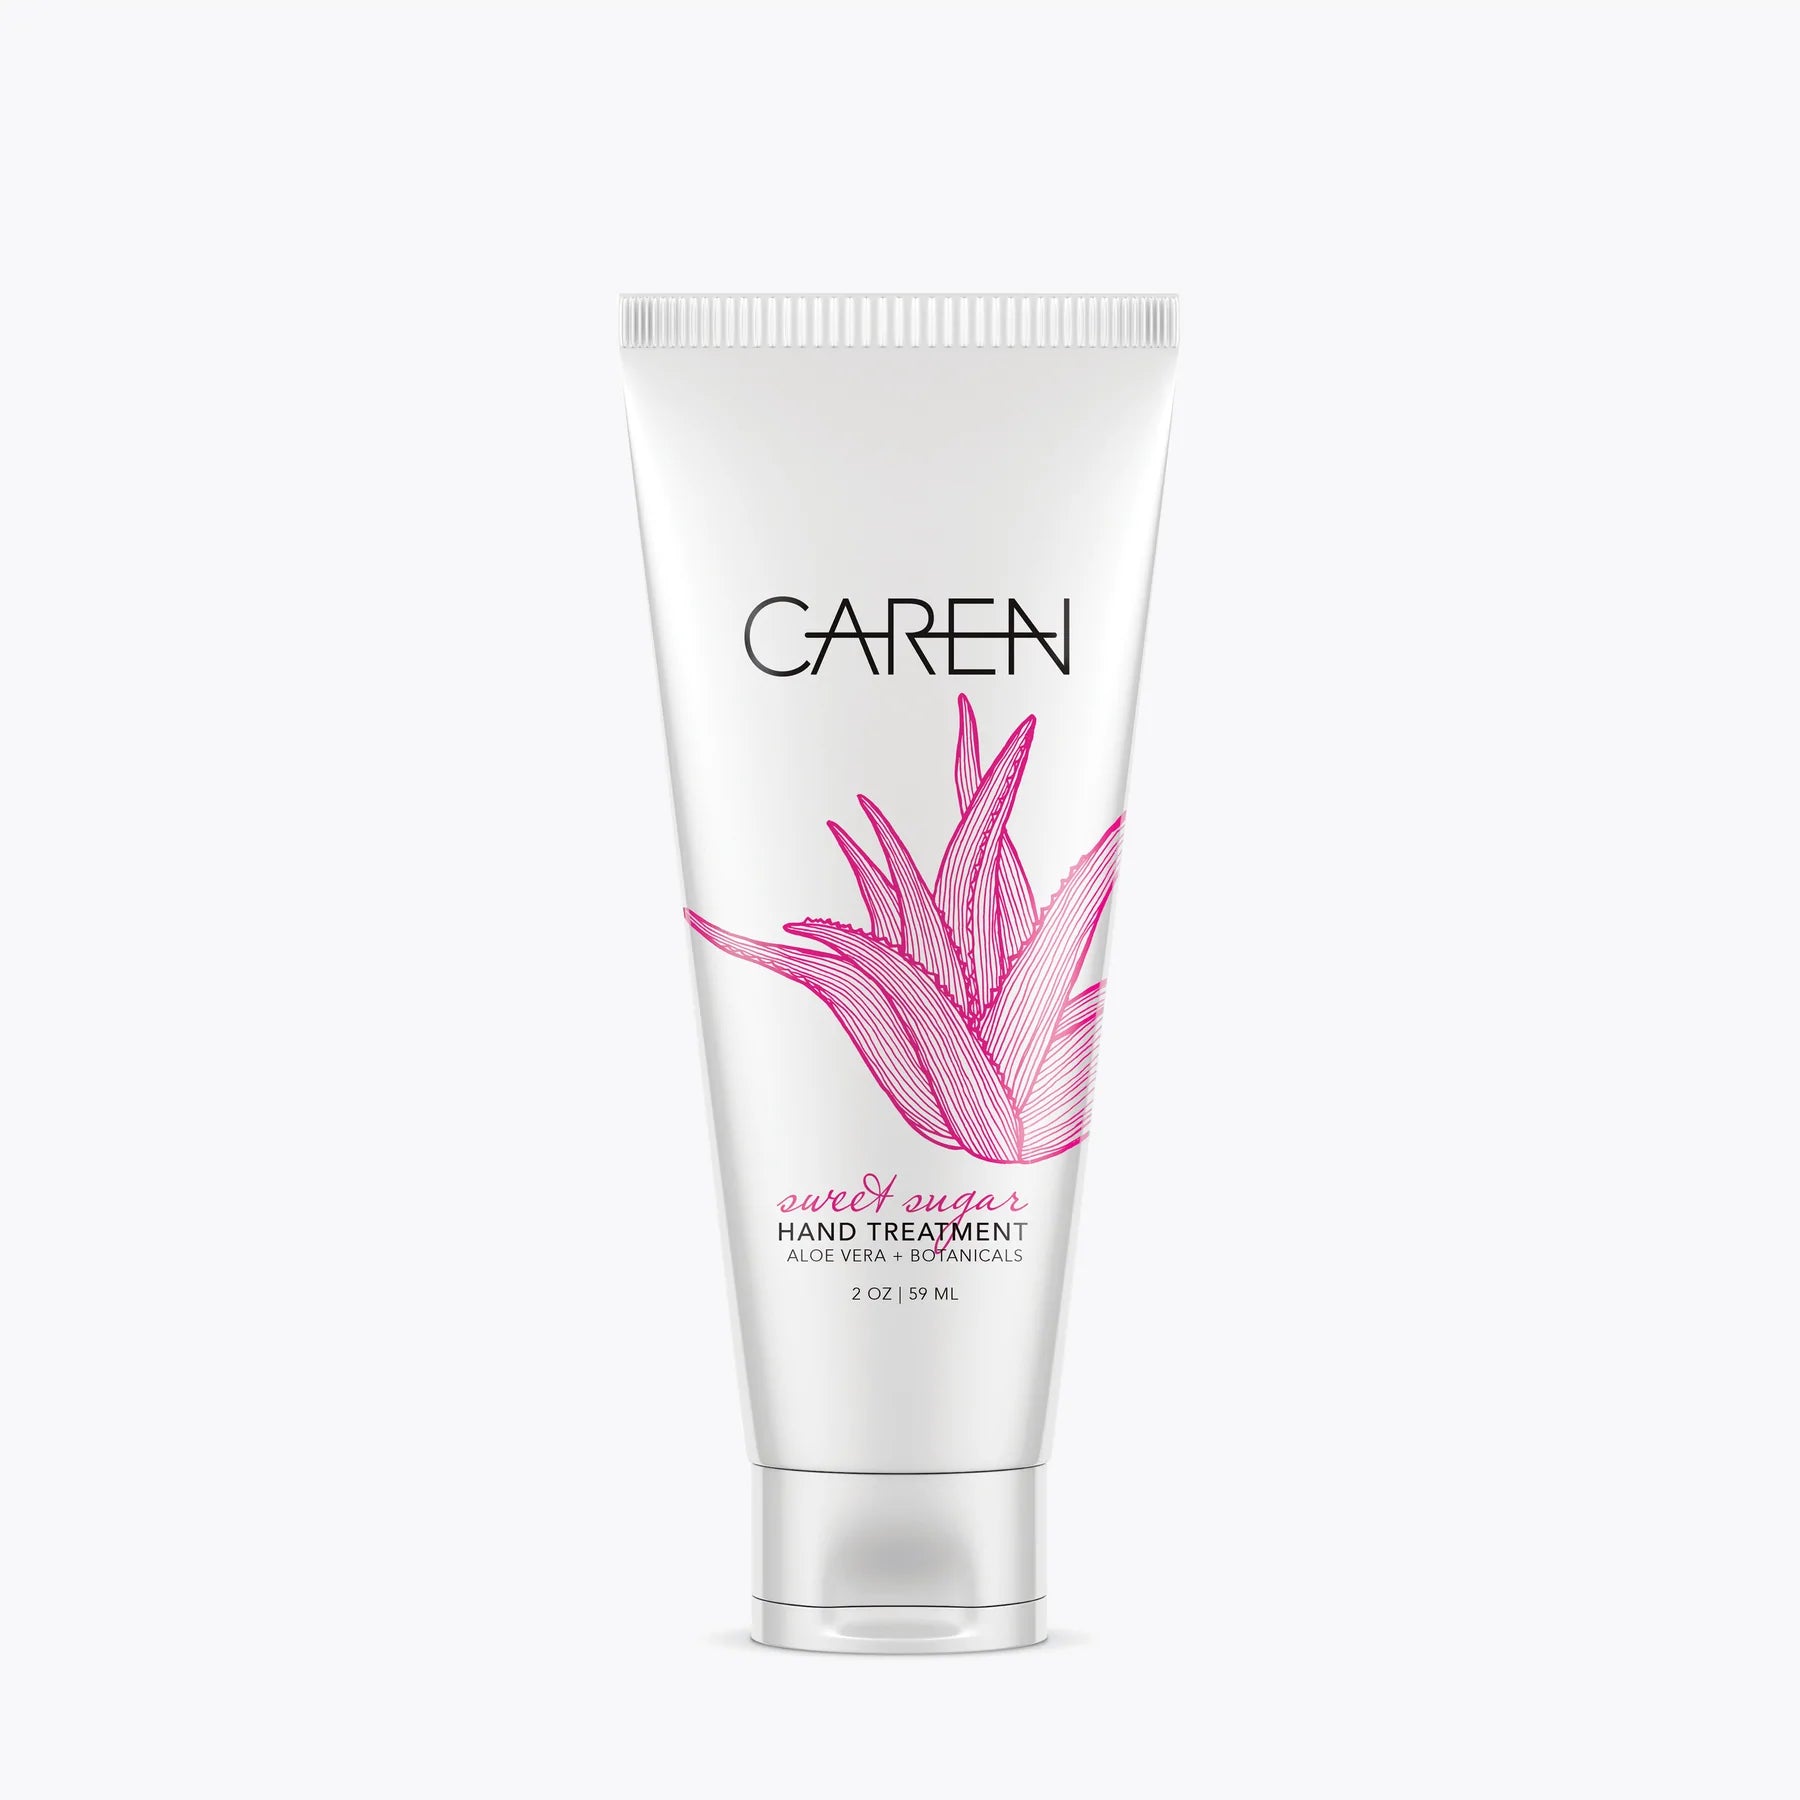 Caren Hand Treatment - Sweet Sugar - 2 oz - Lake Norman Gifts